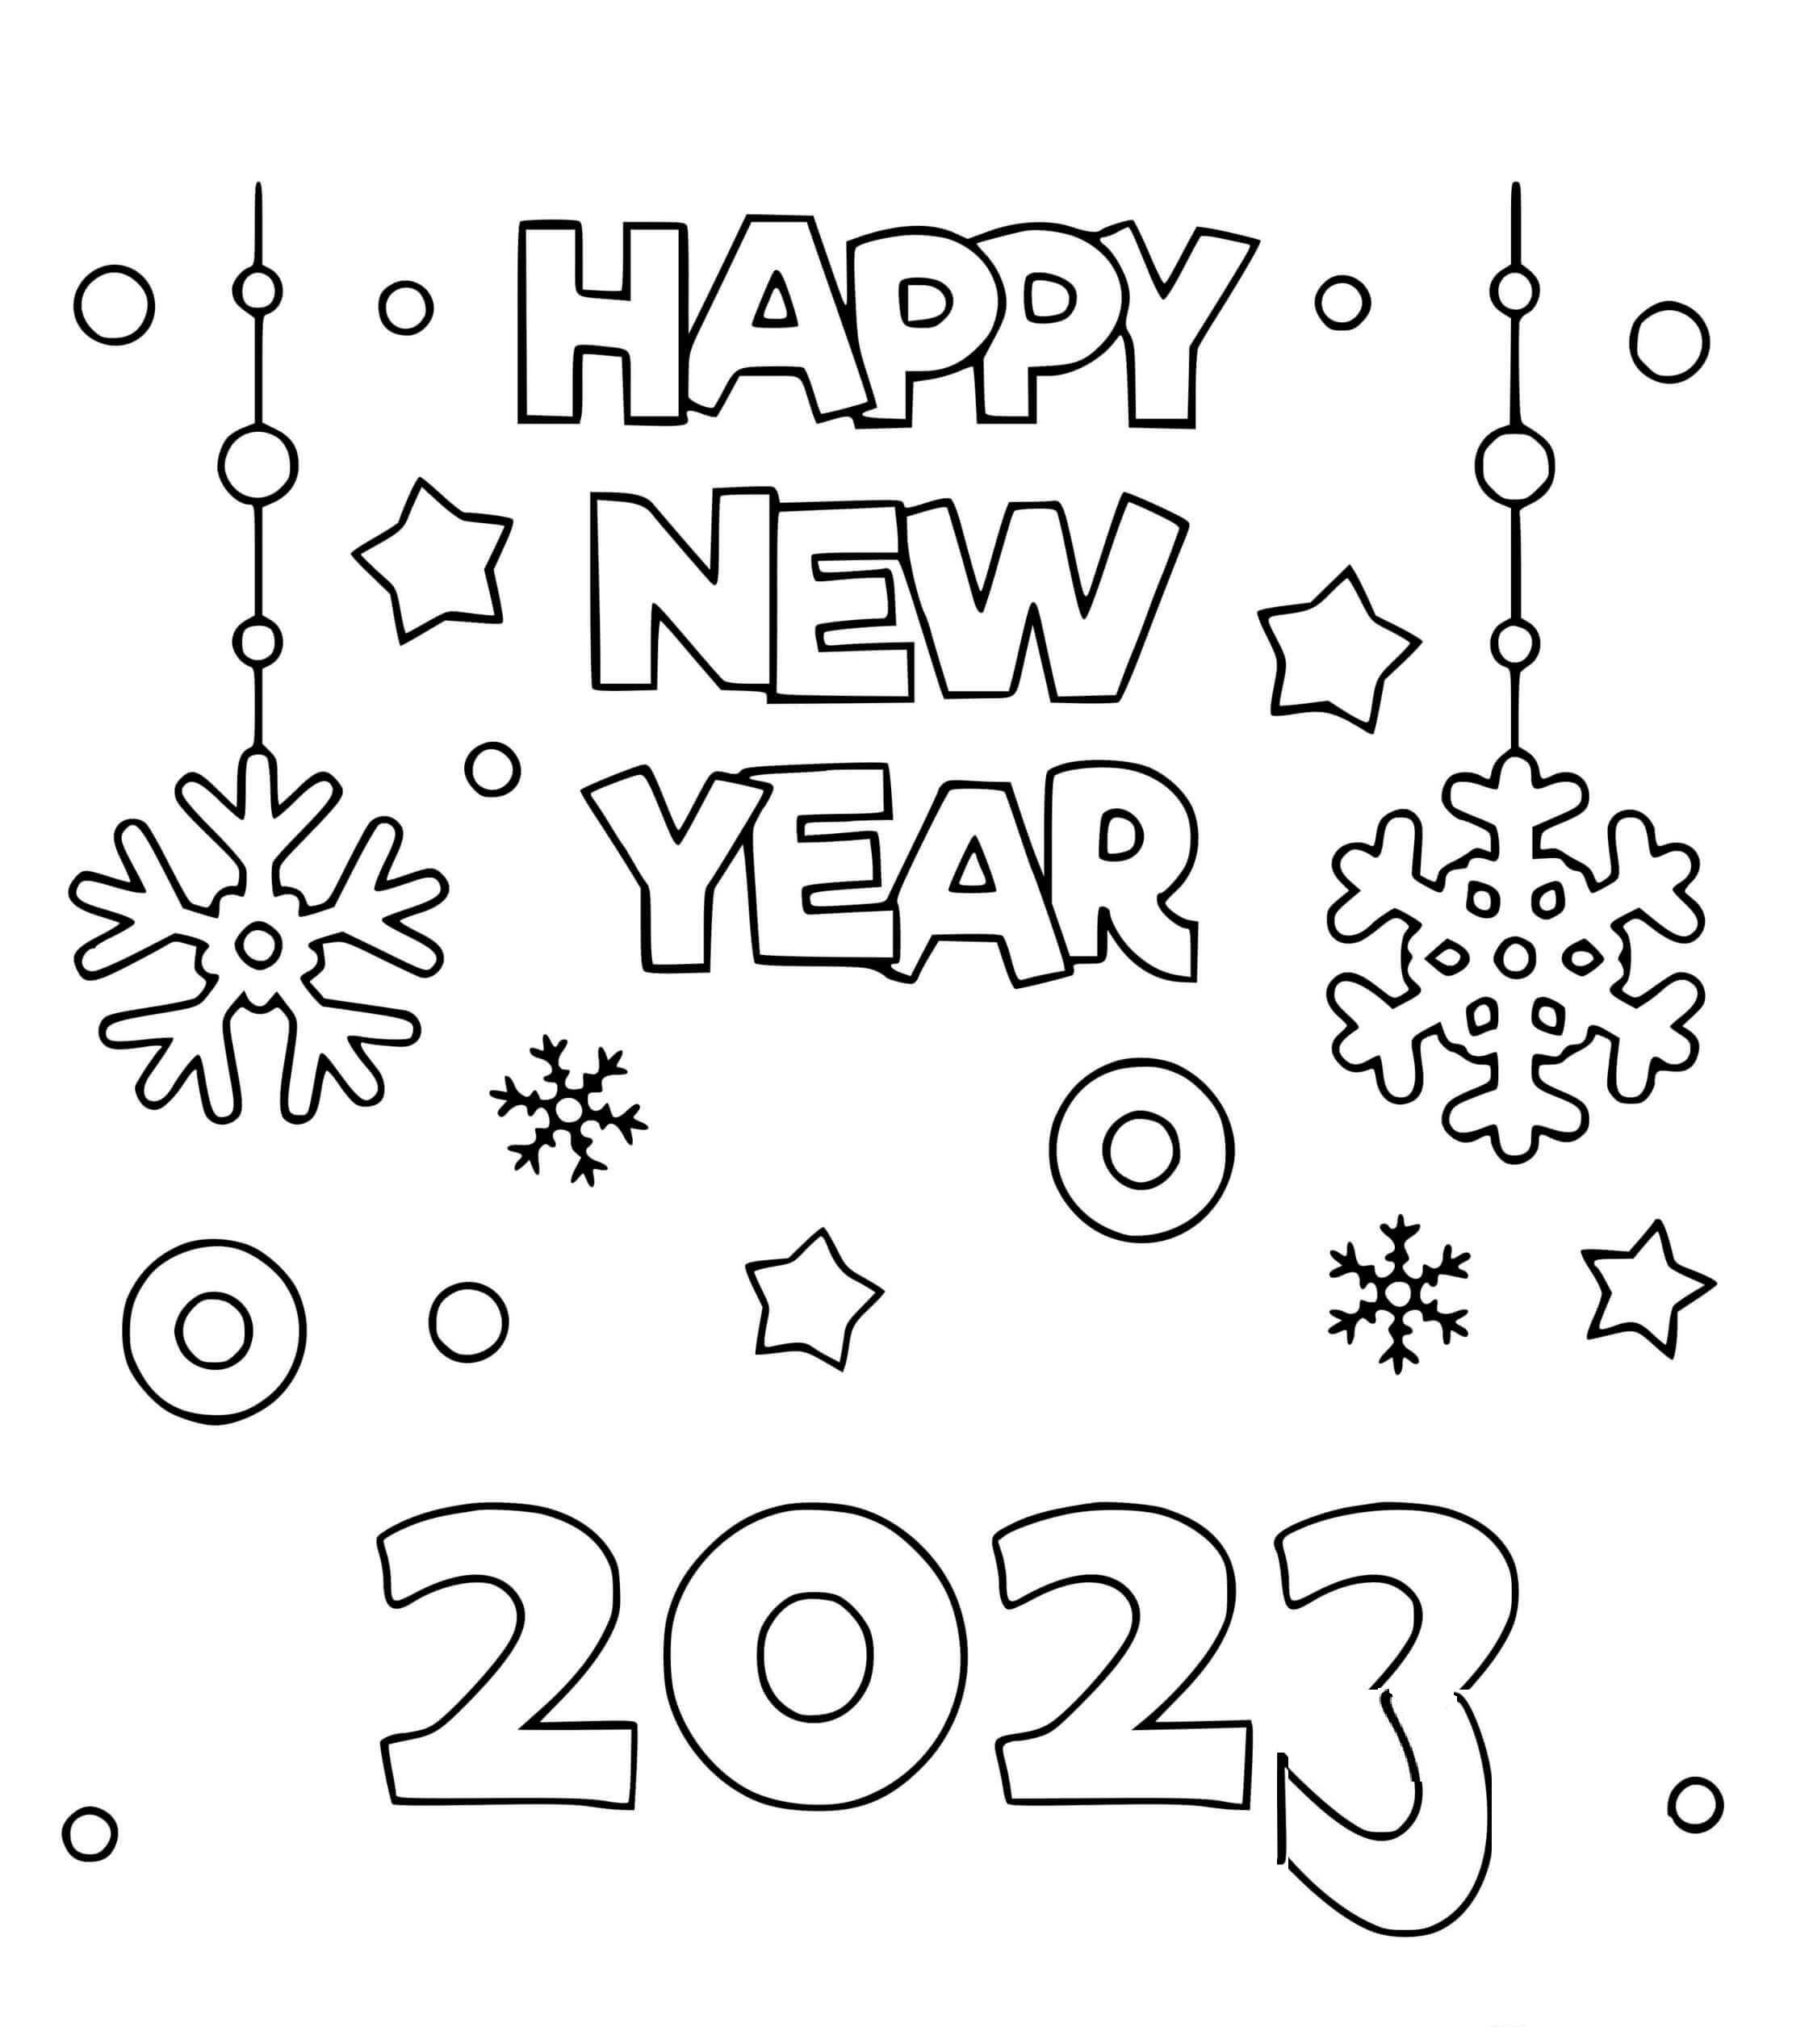 Happy New Year 2023 Coloring Page 6 - SheetalColor.com